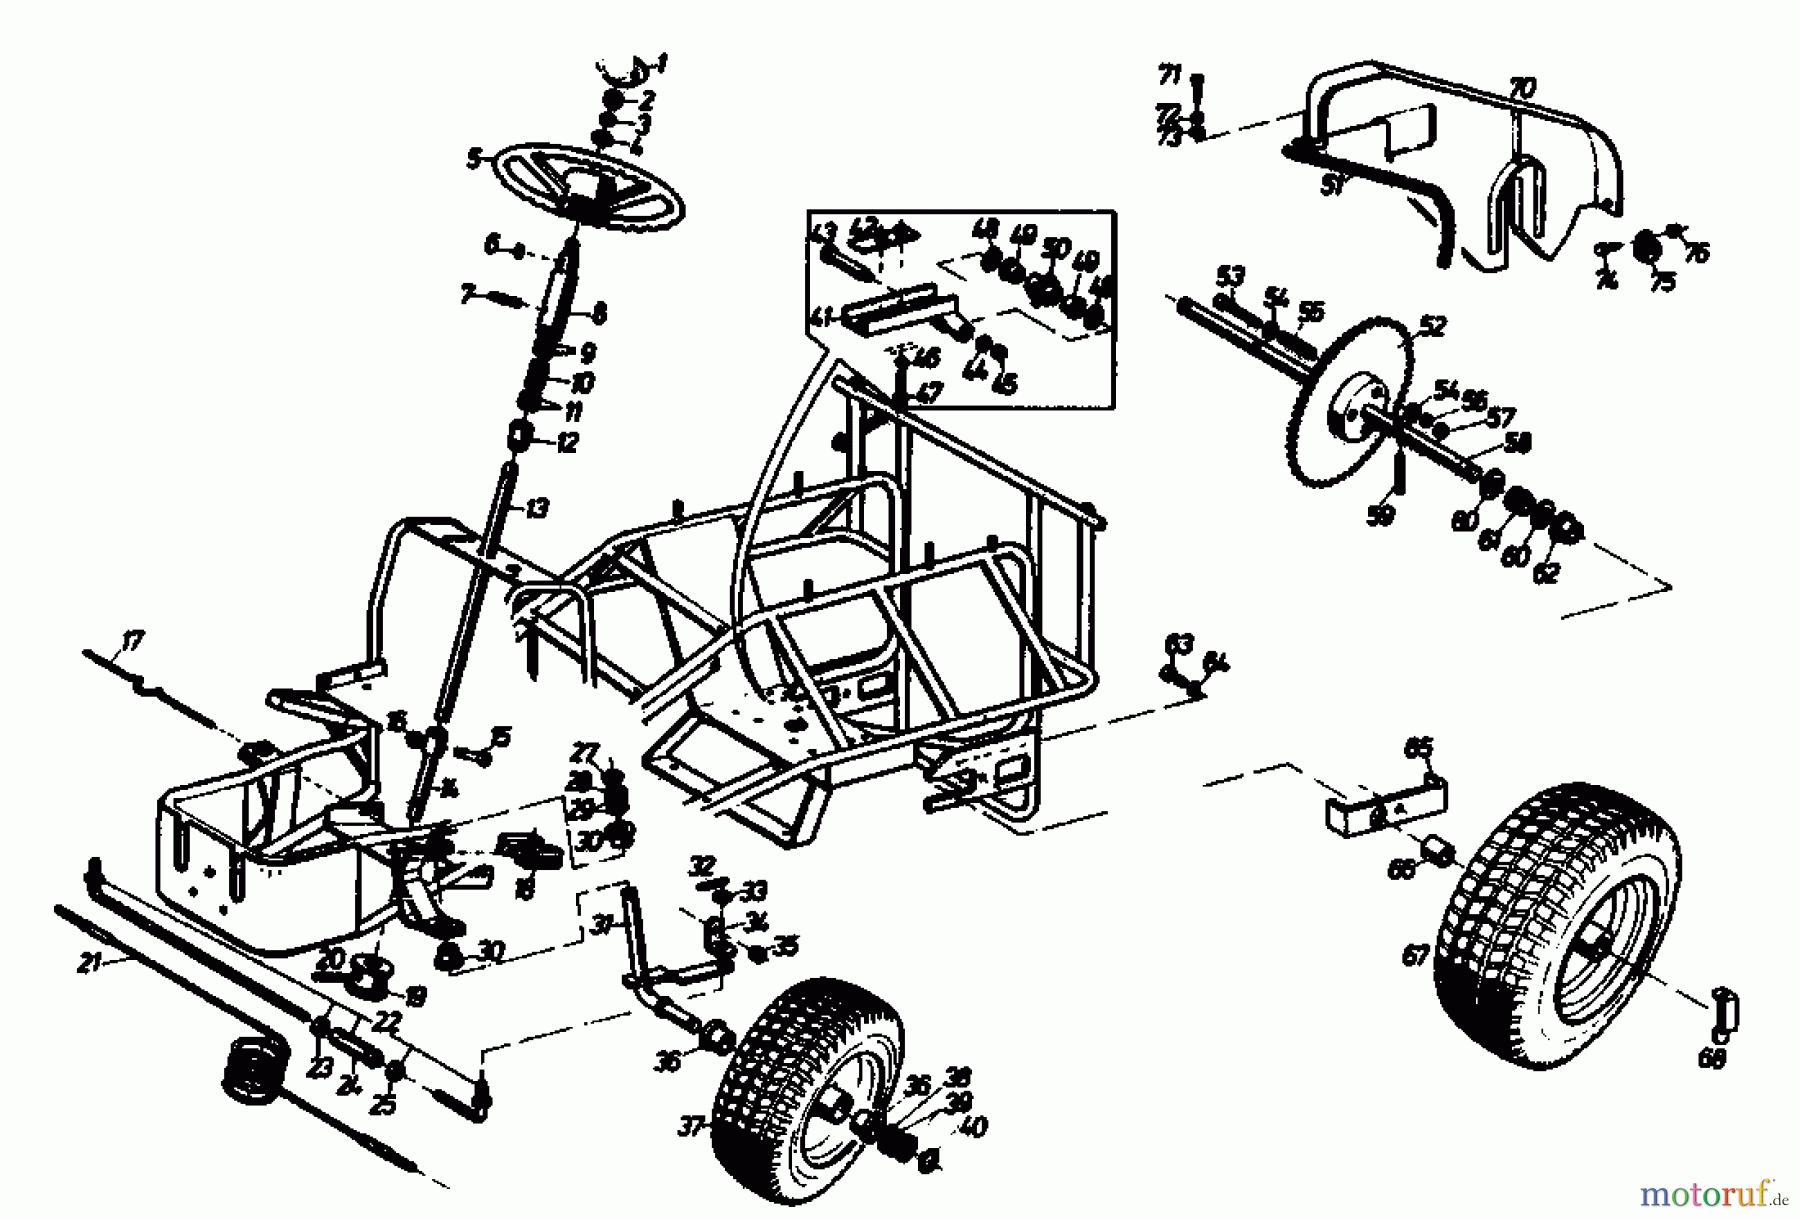  Golf Lawn tractors SPIDER 170 SD 4 02840.03  (1989) Drive system, Steering wheel, Steering, Wheels